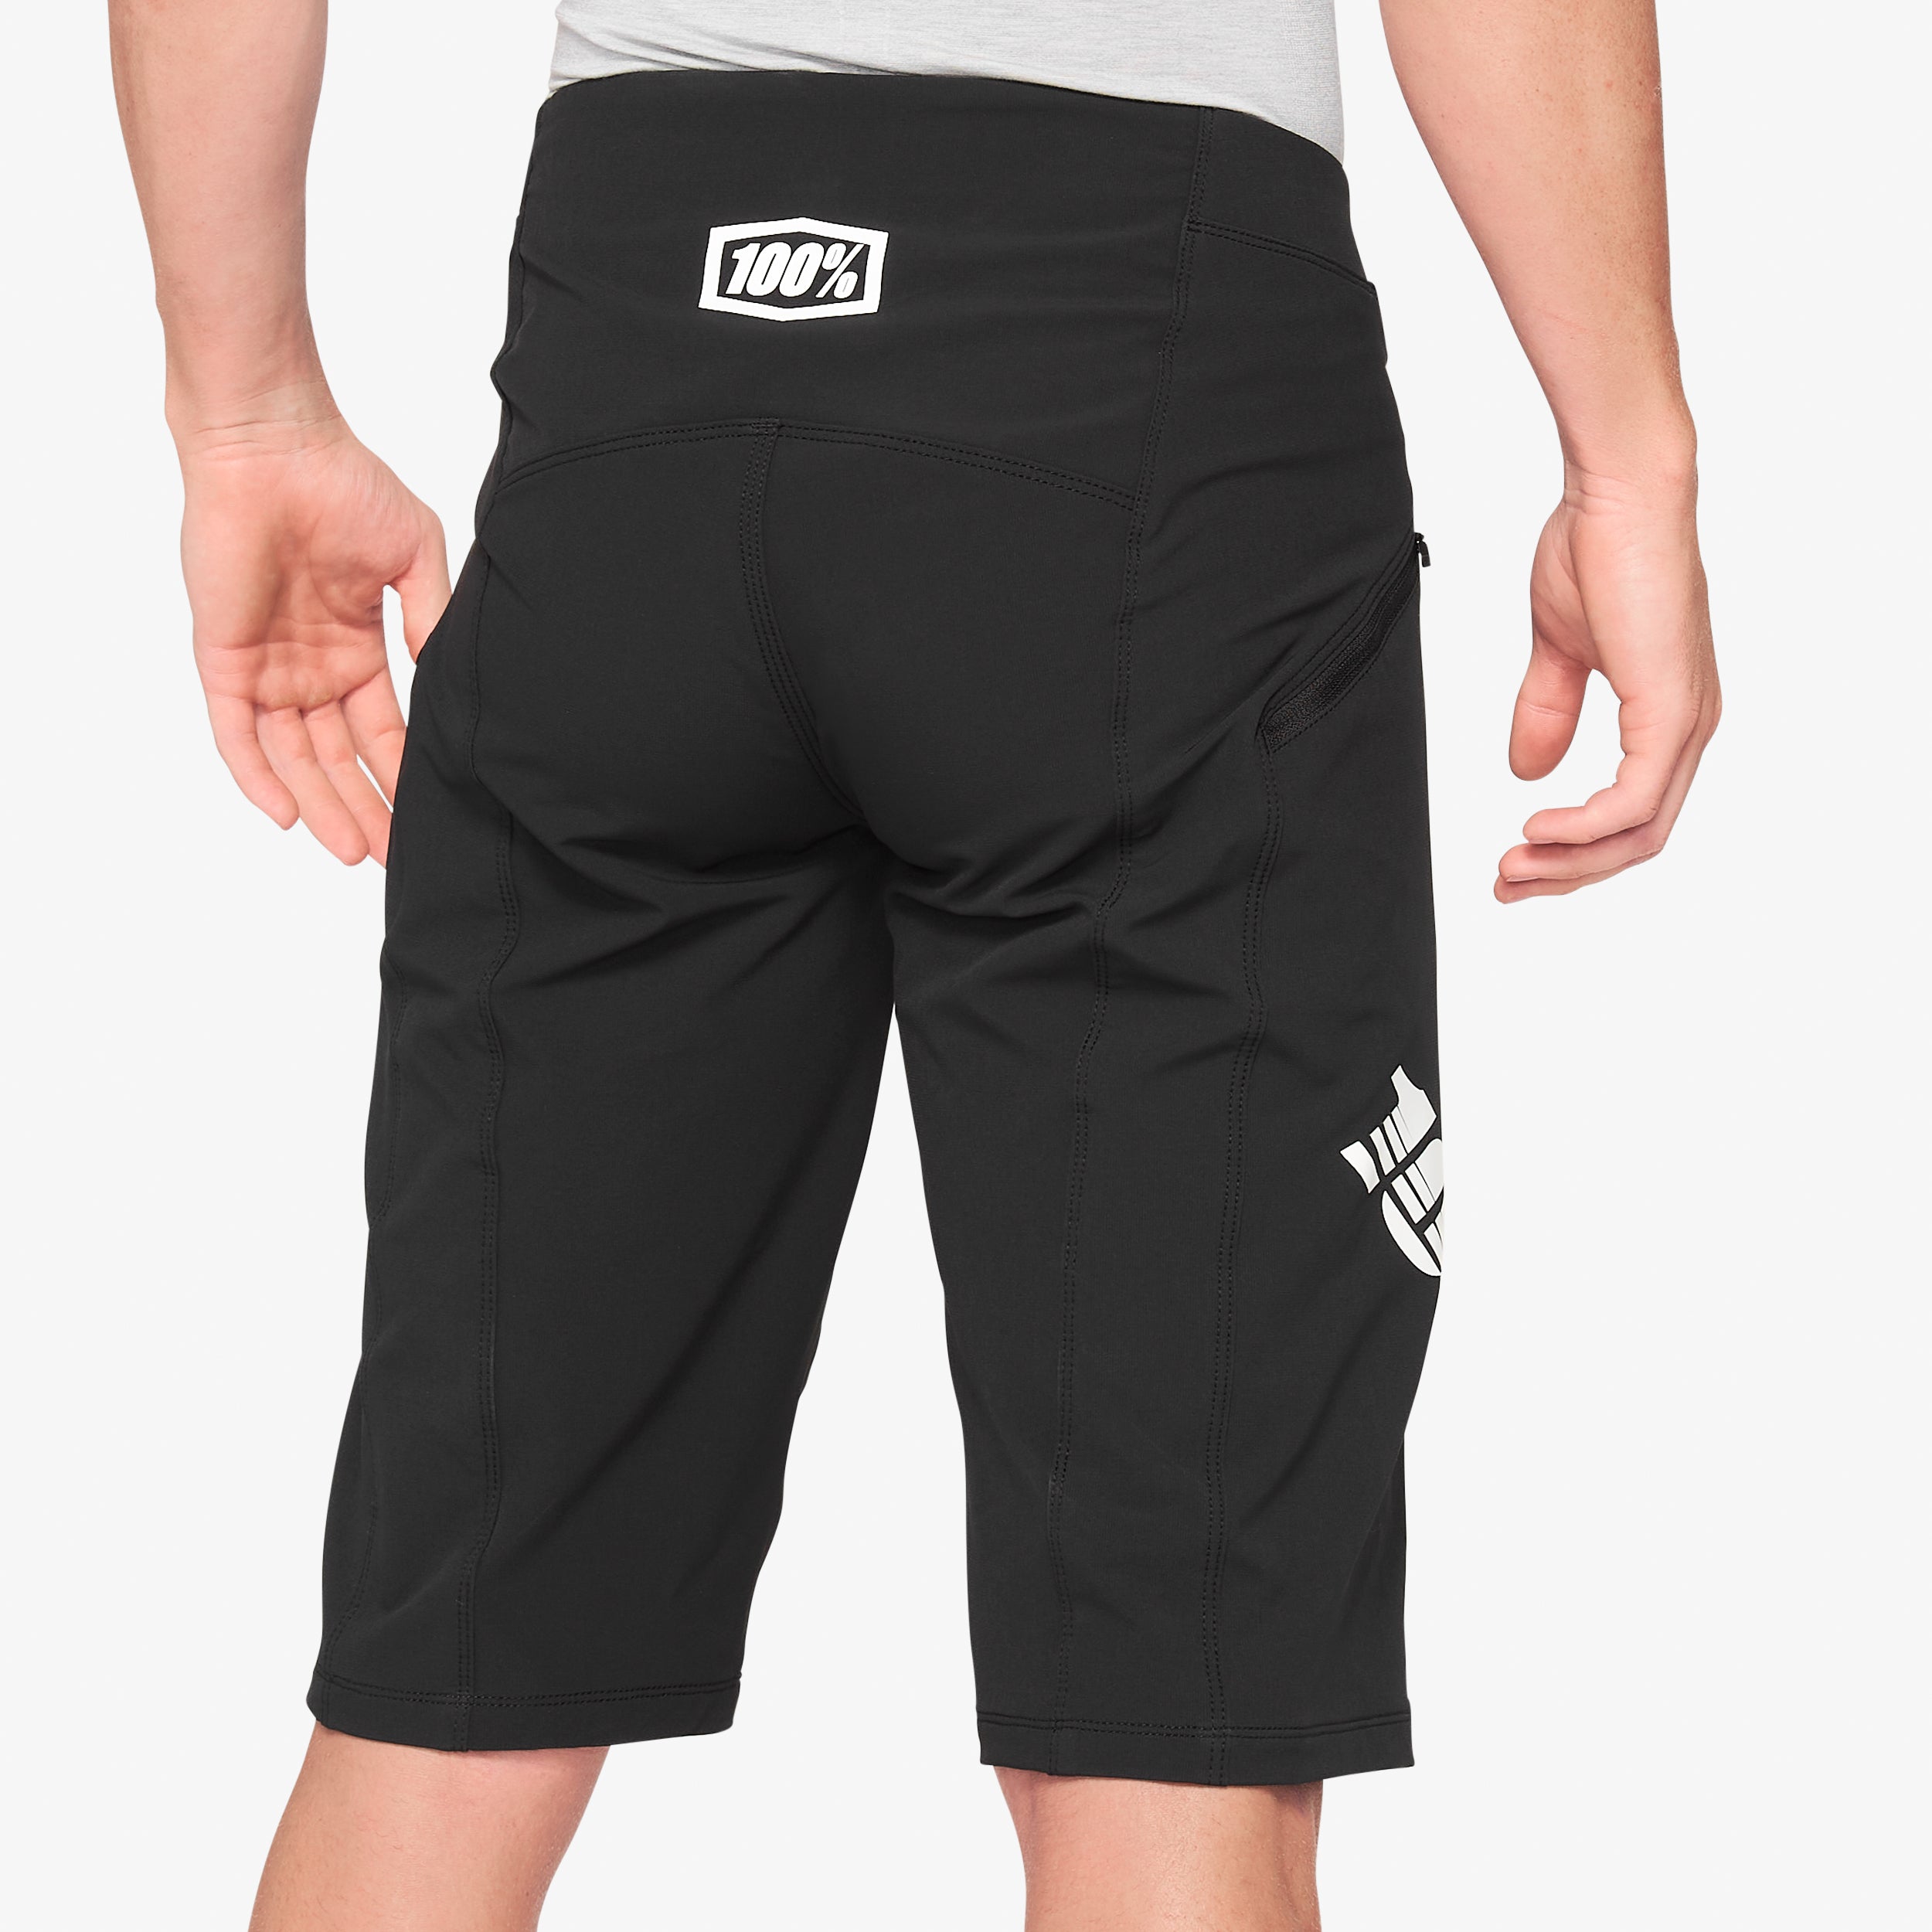 R-CORE X Shorts Black - Secondary